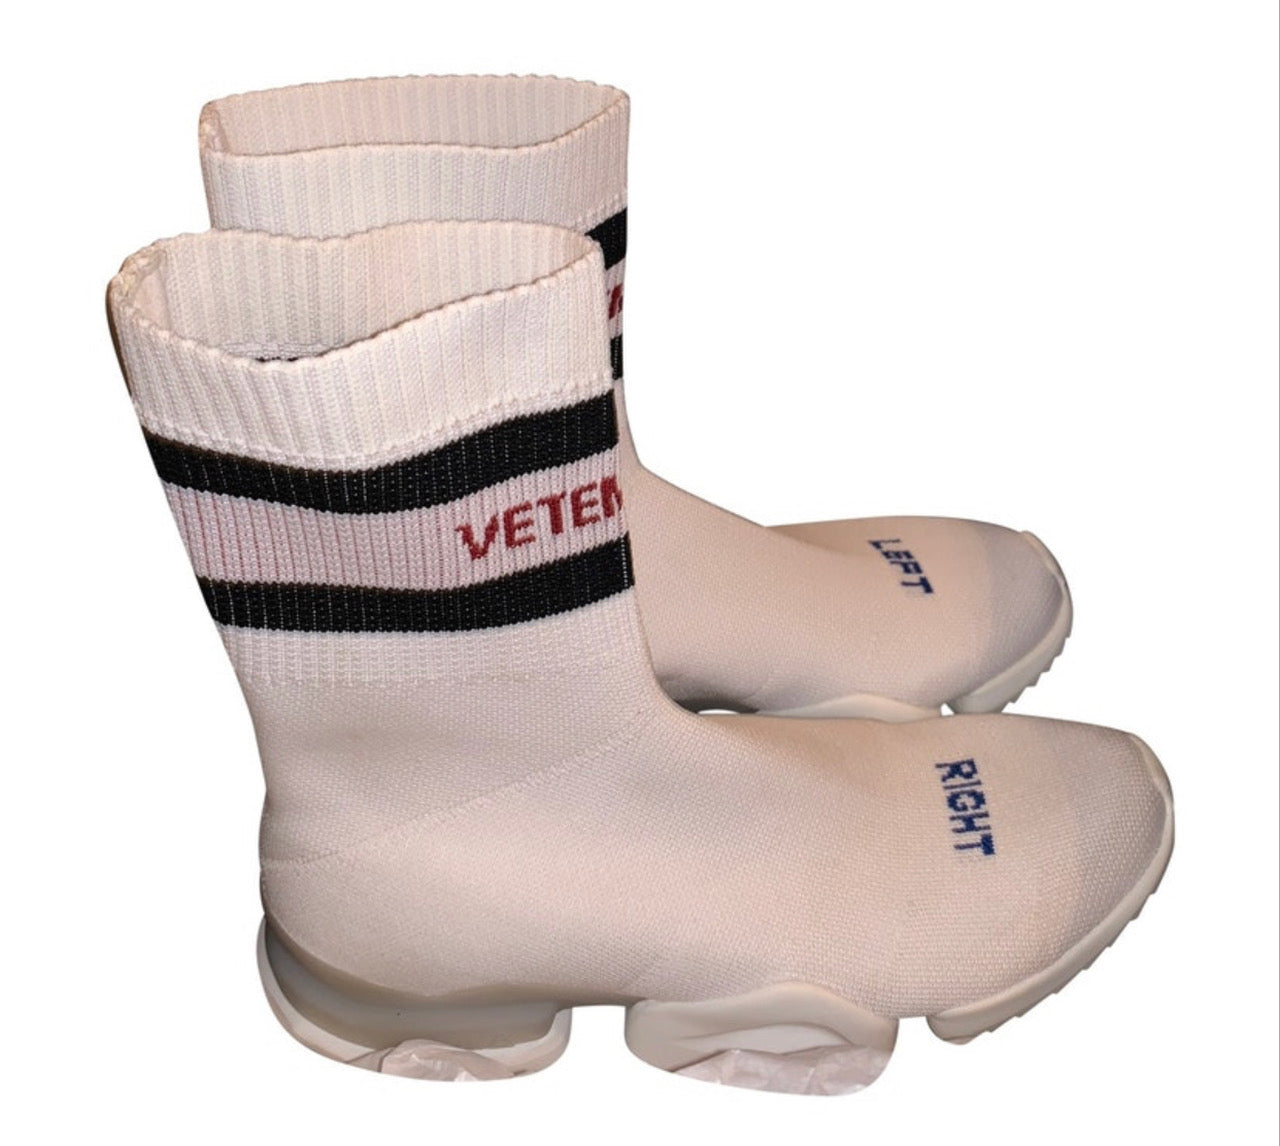 Reebok x Vetements sock trainers